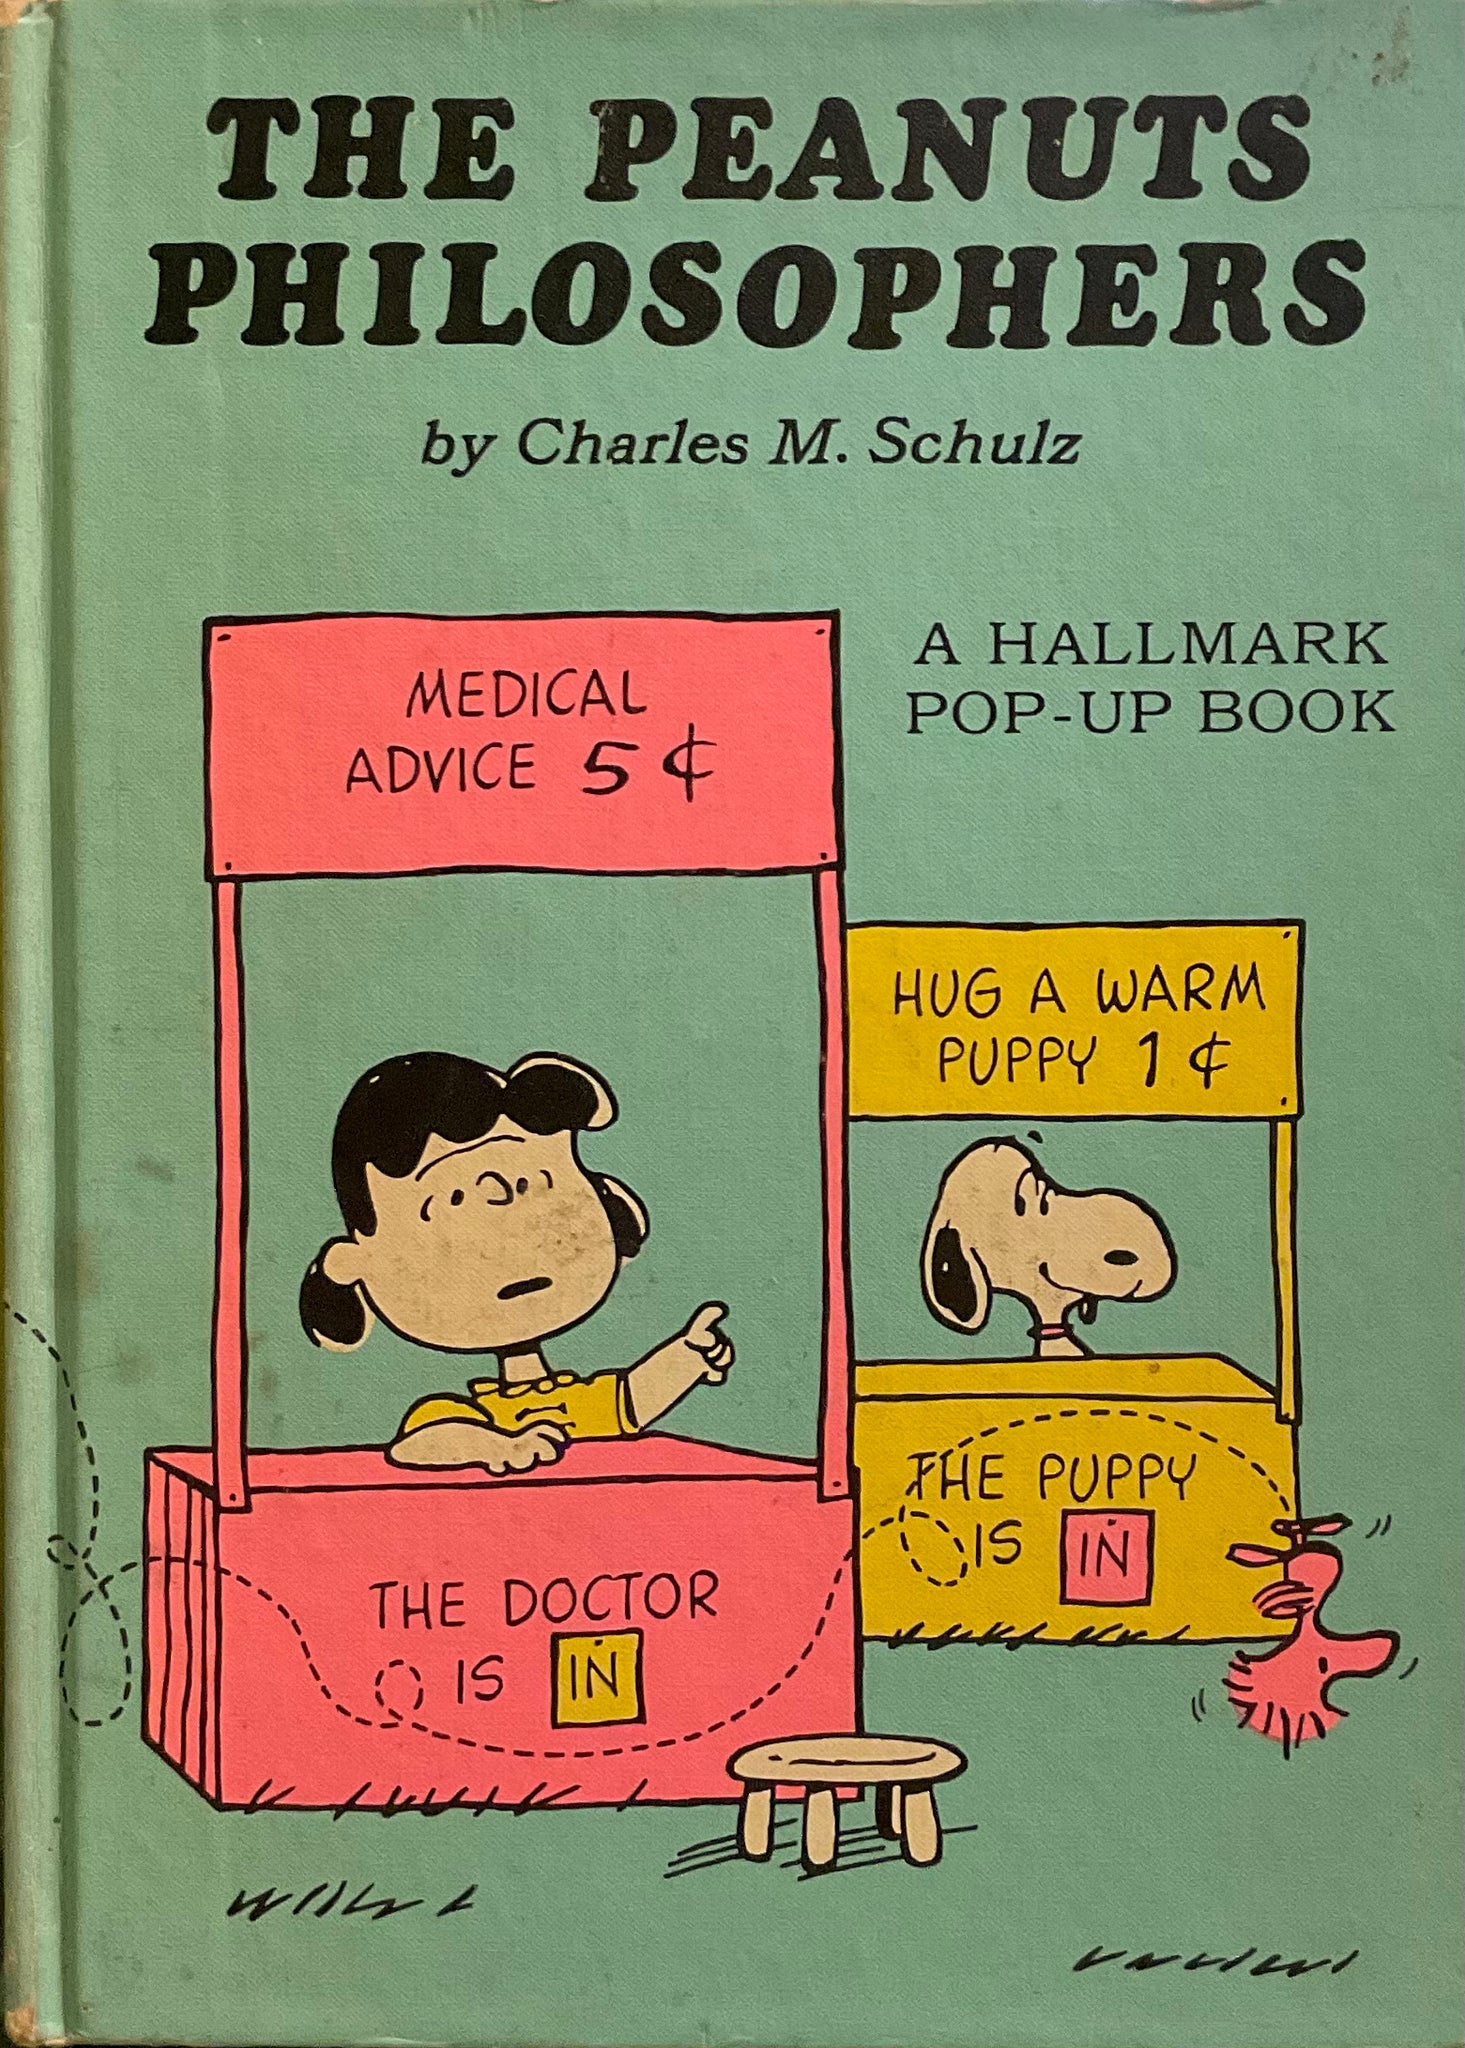 The Peanuts Philosophers, Charles M. Schultz